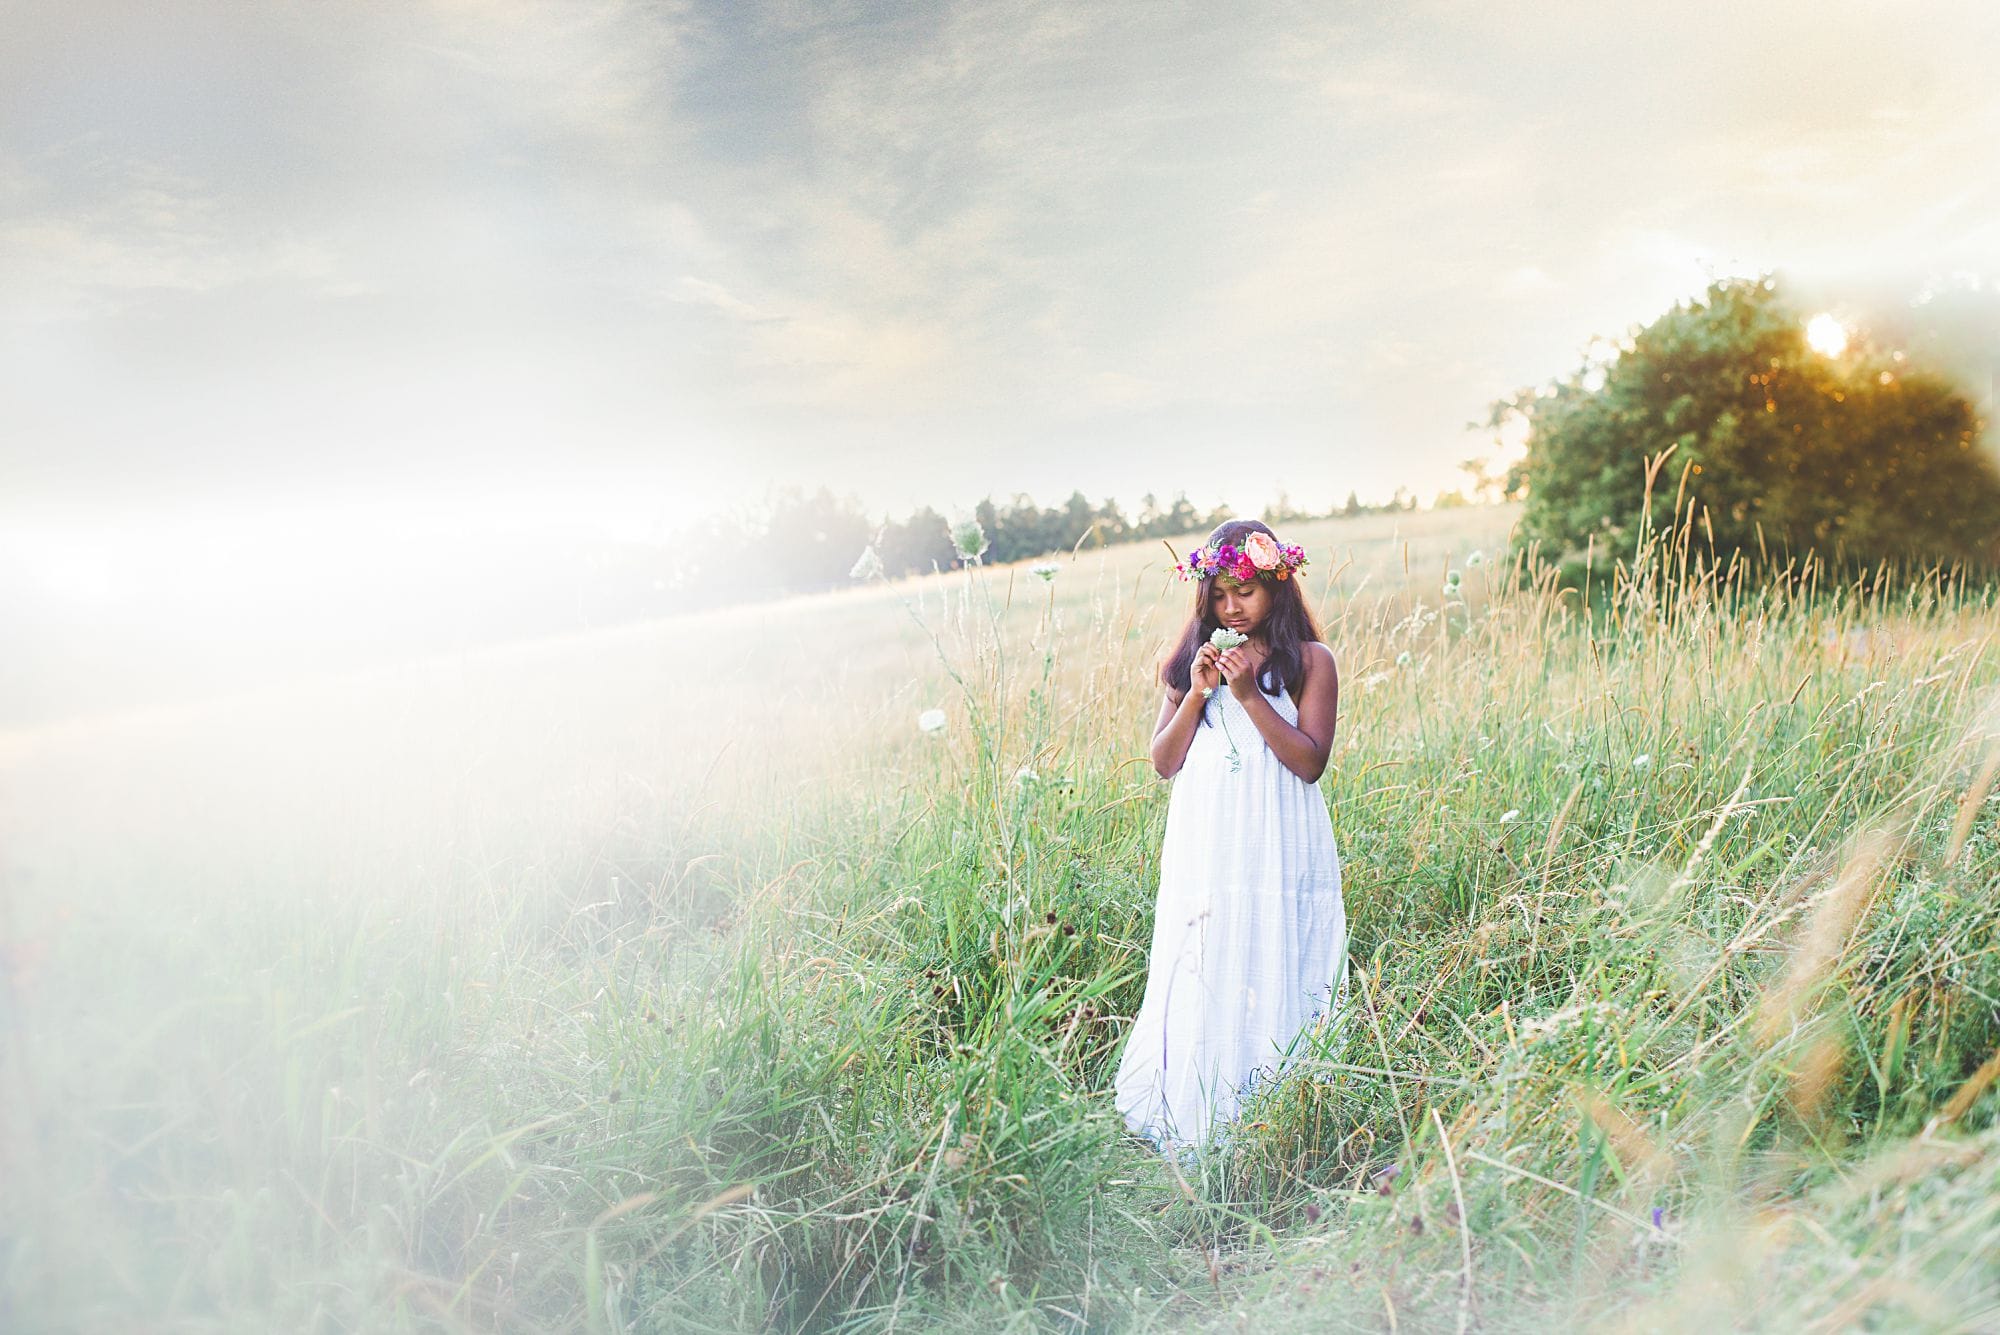 Young girl in an open field wearing a long white dress wearing flowers in her hair